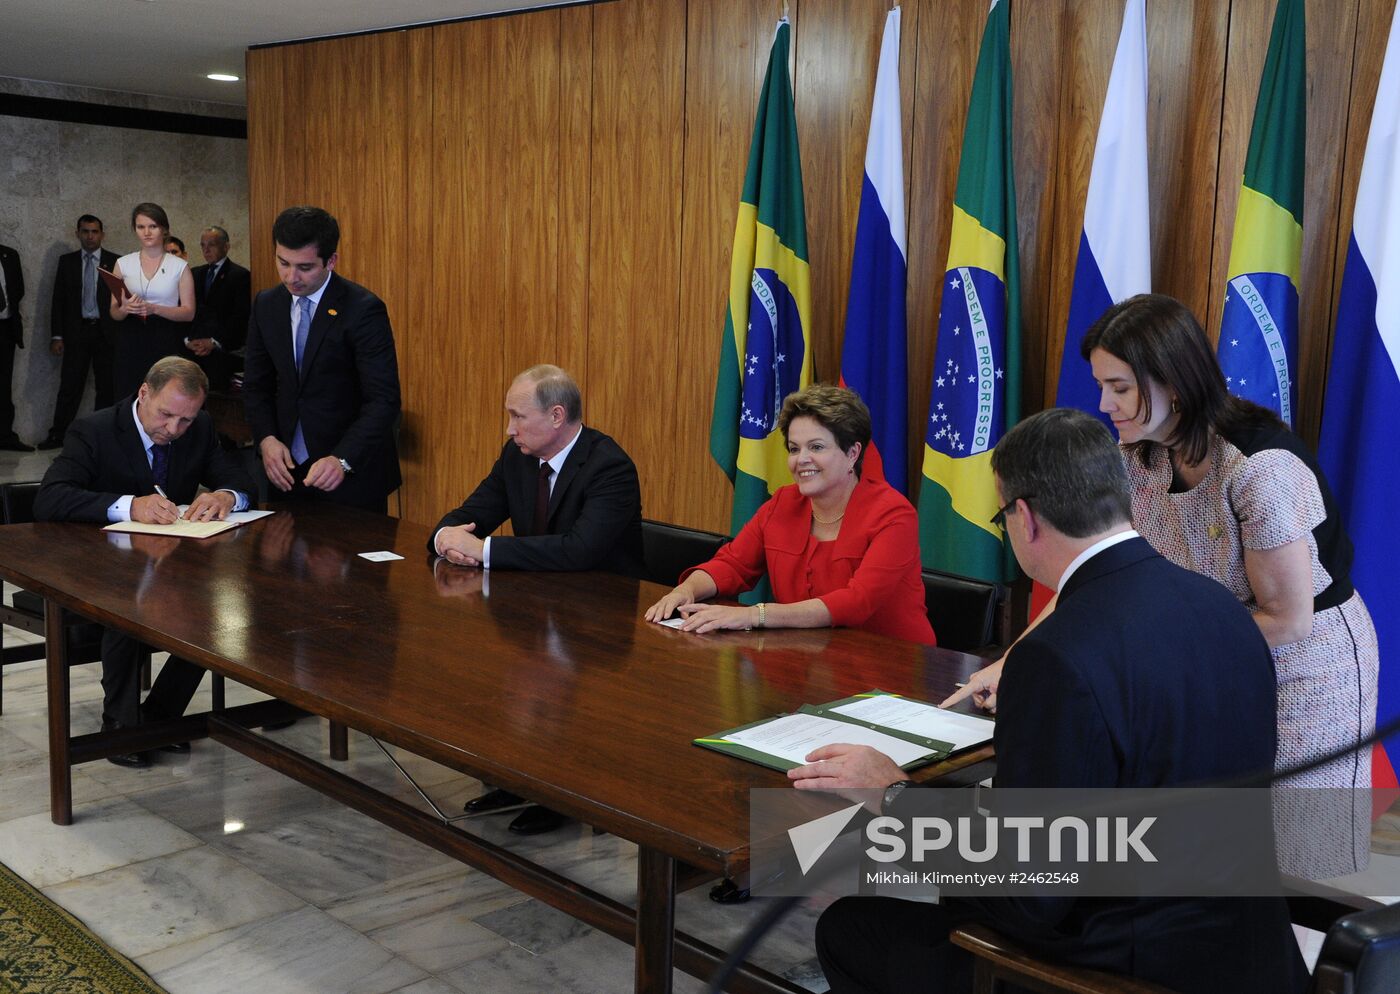 Vladimir Putin's official visit to Brazil